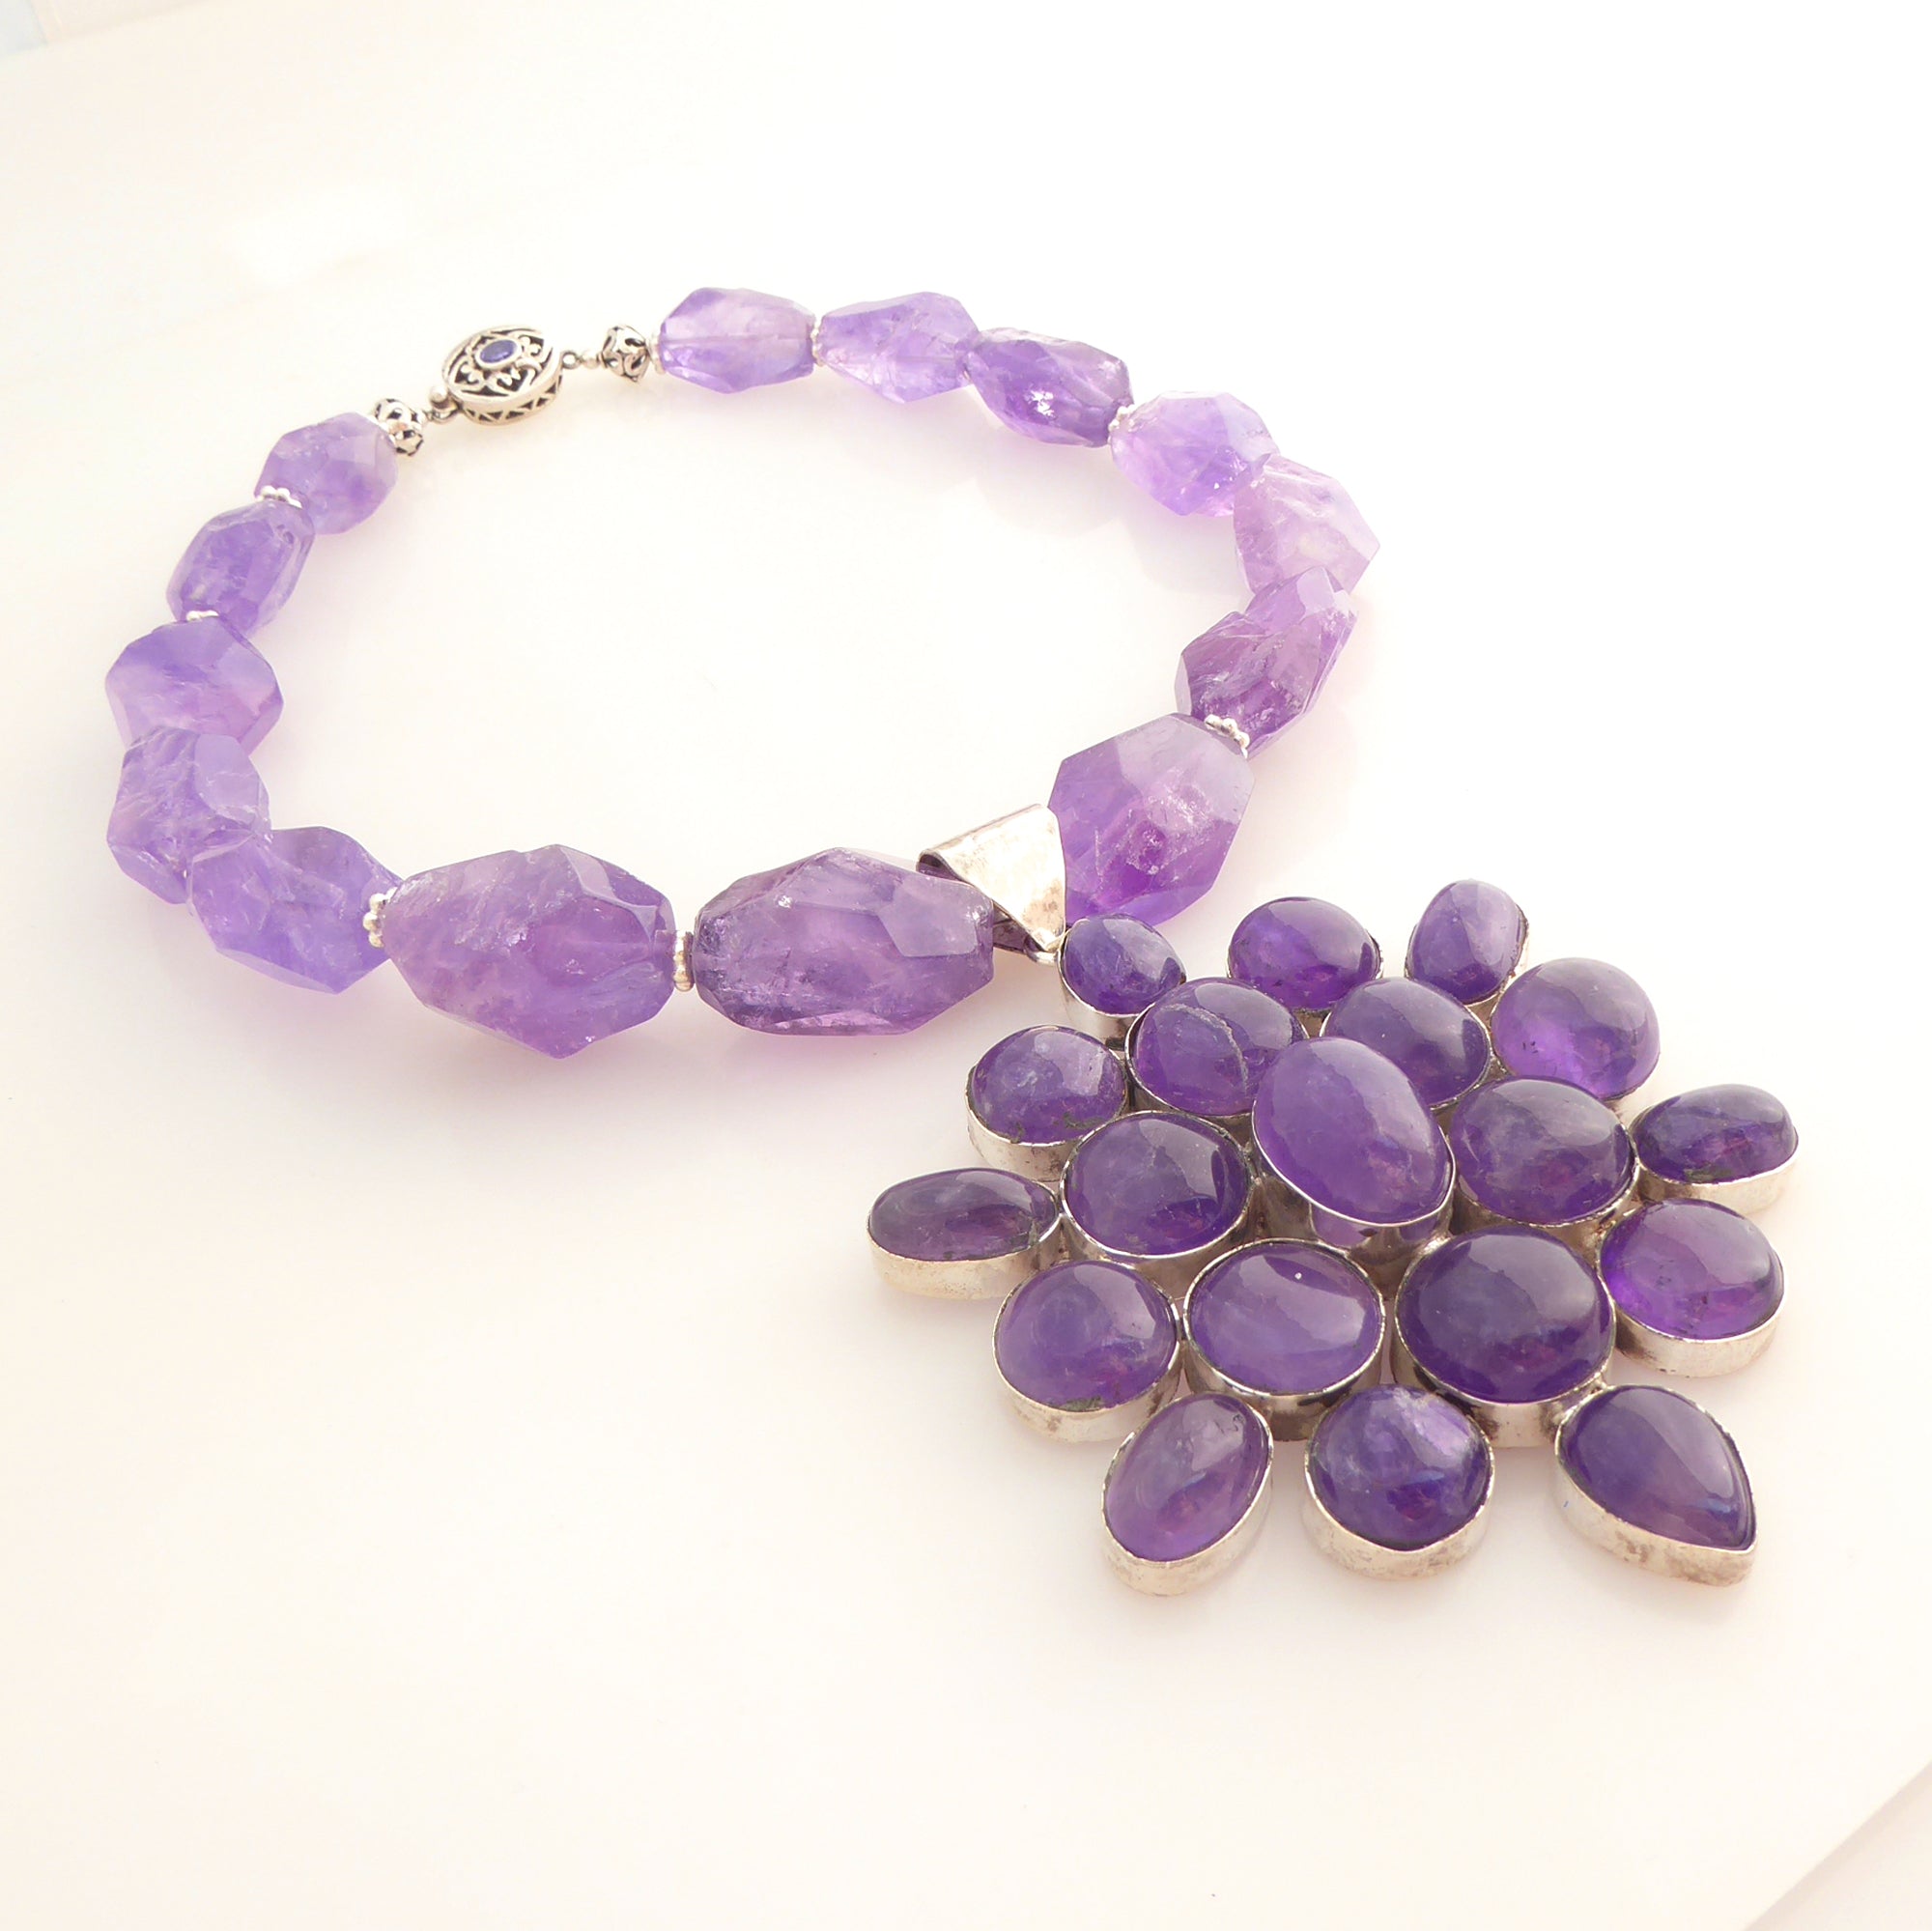 Amethyst star necklace by Jenny Dayco 2